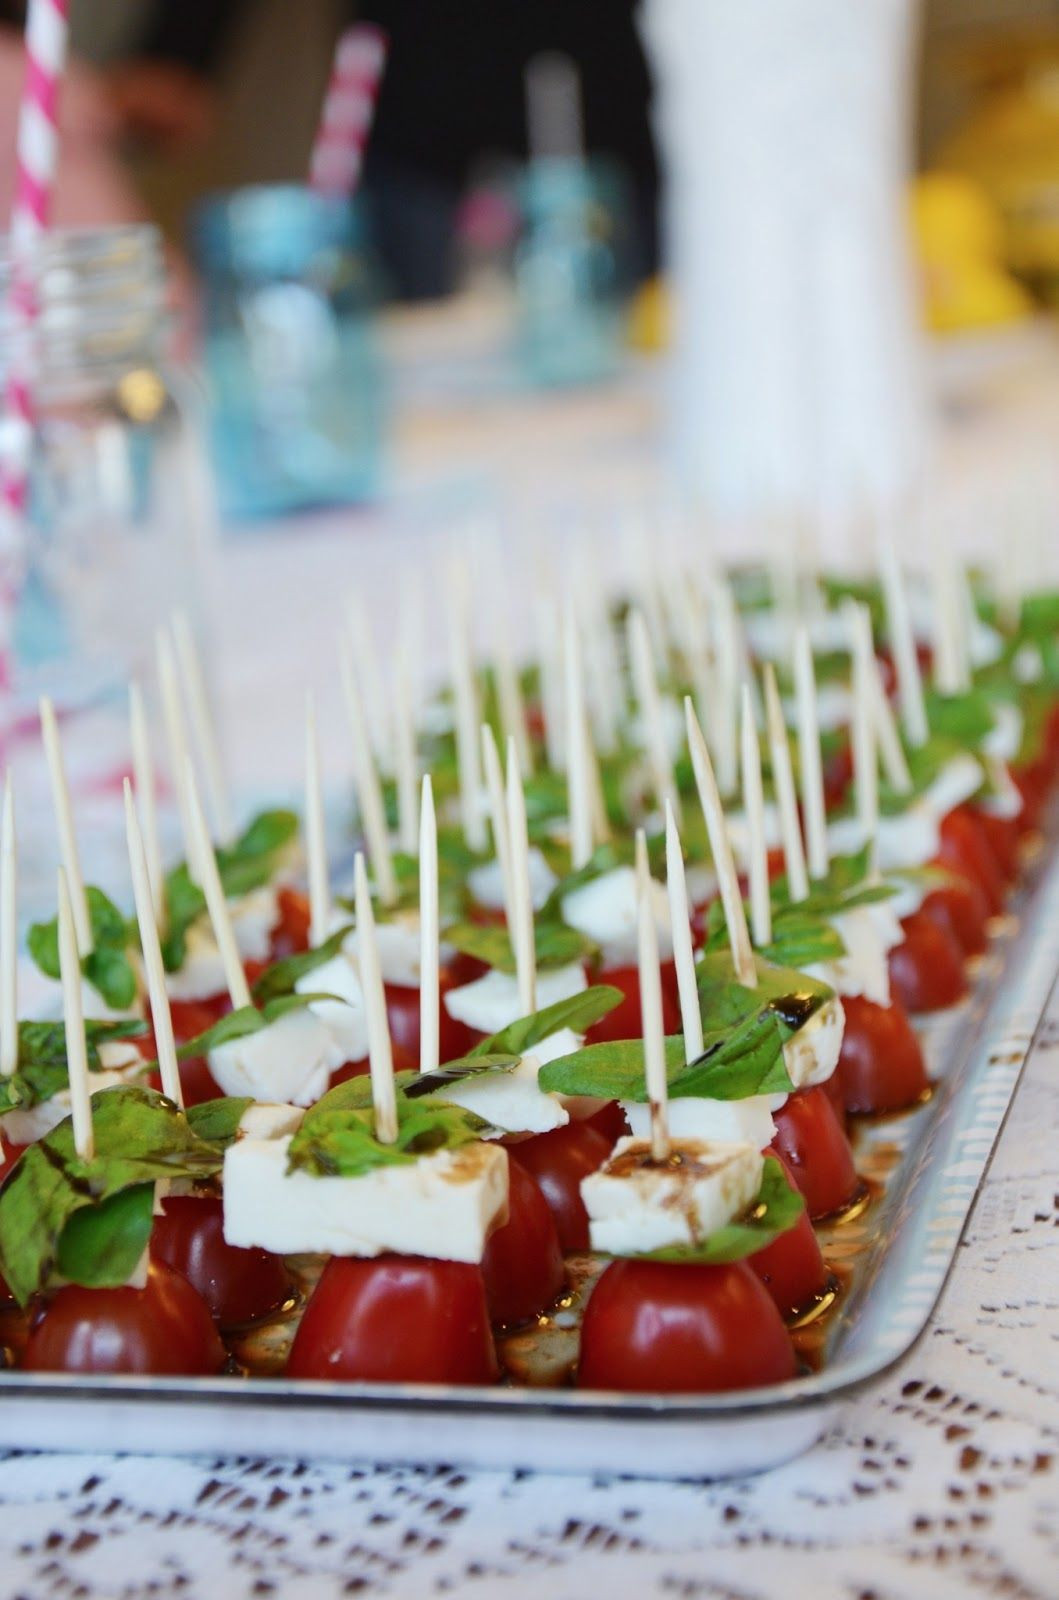 Italian Themed Dinner Party Ideas
 caprese salad on a stick